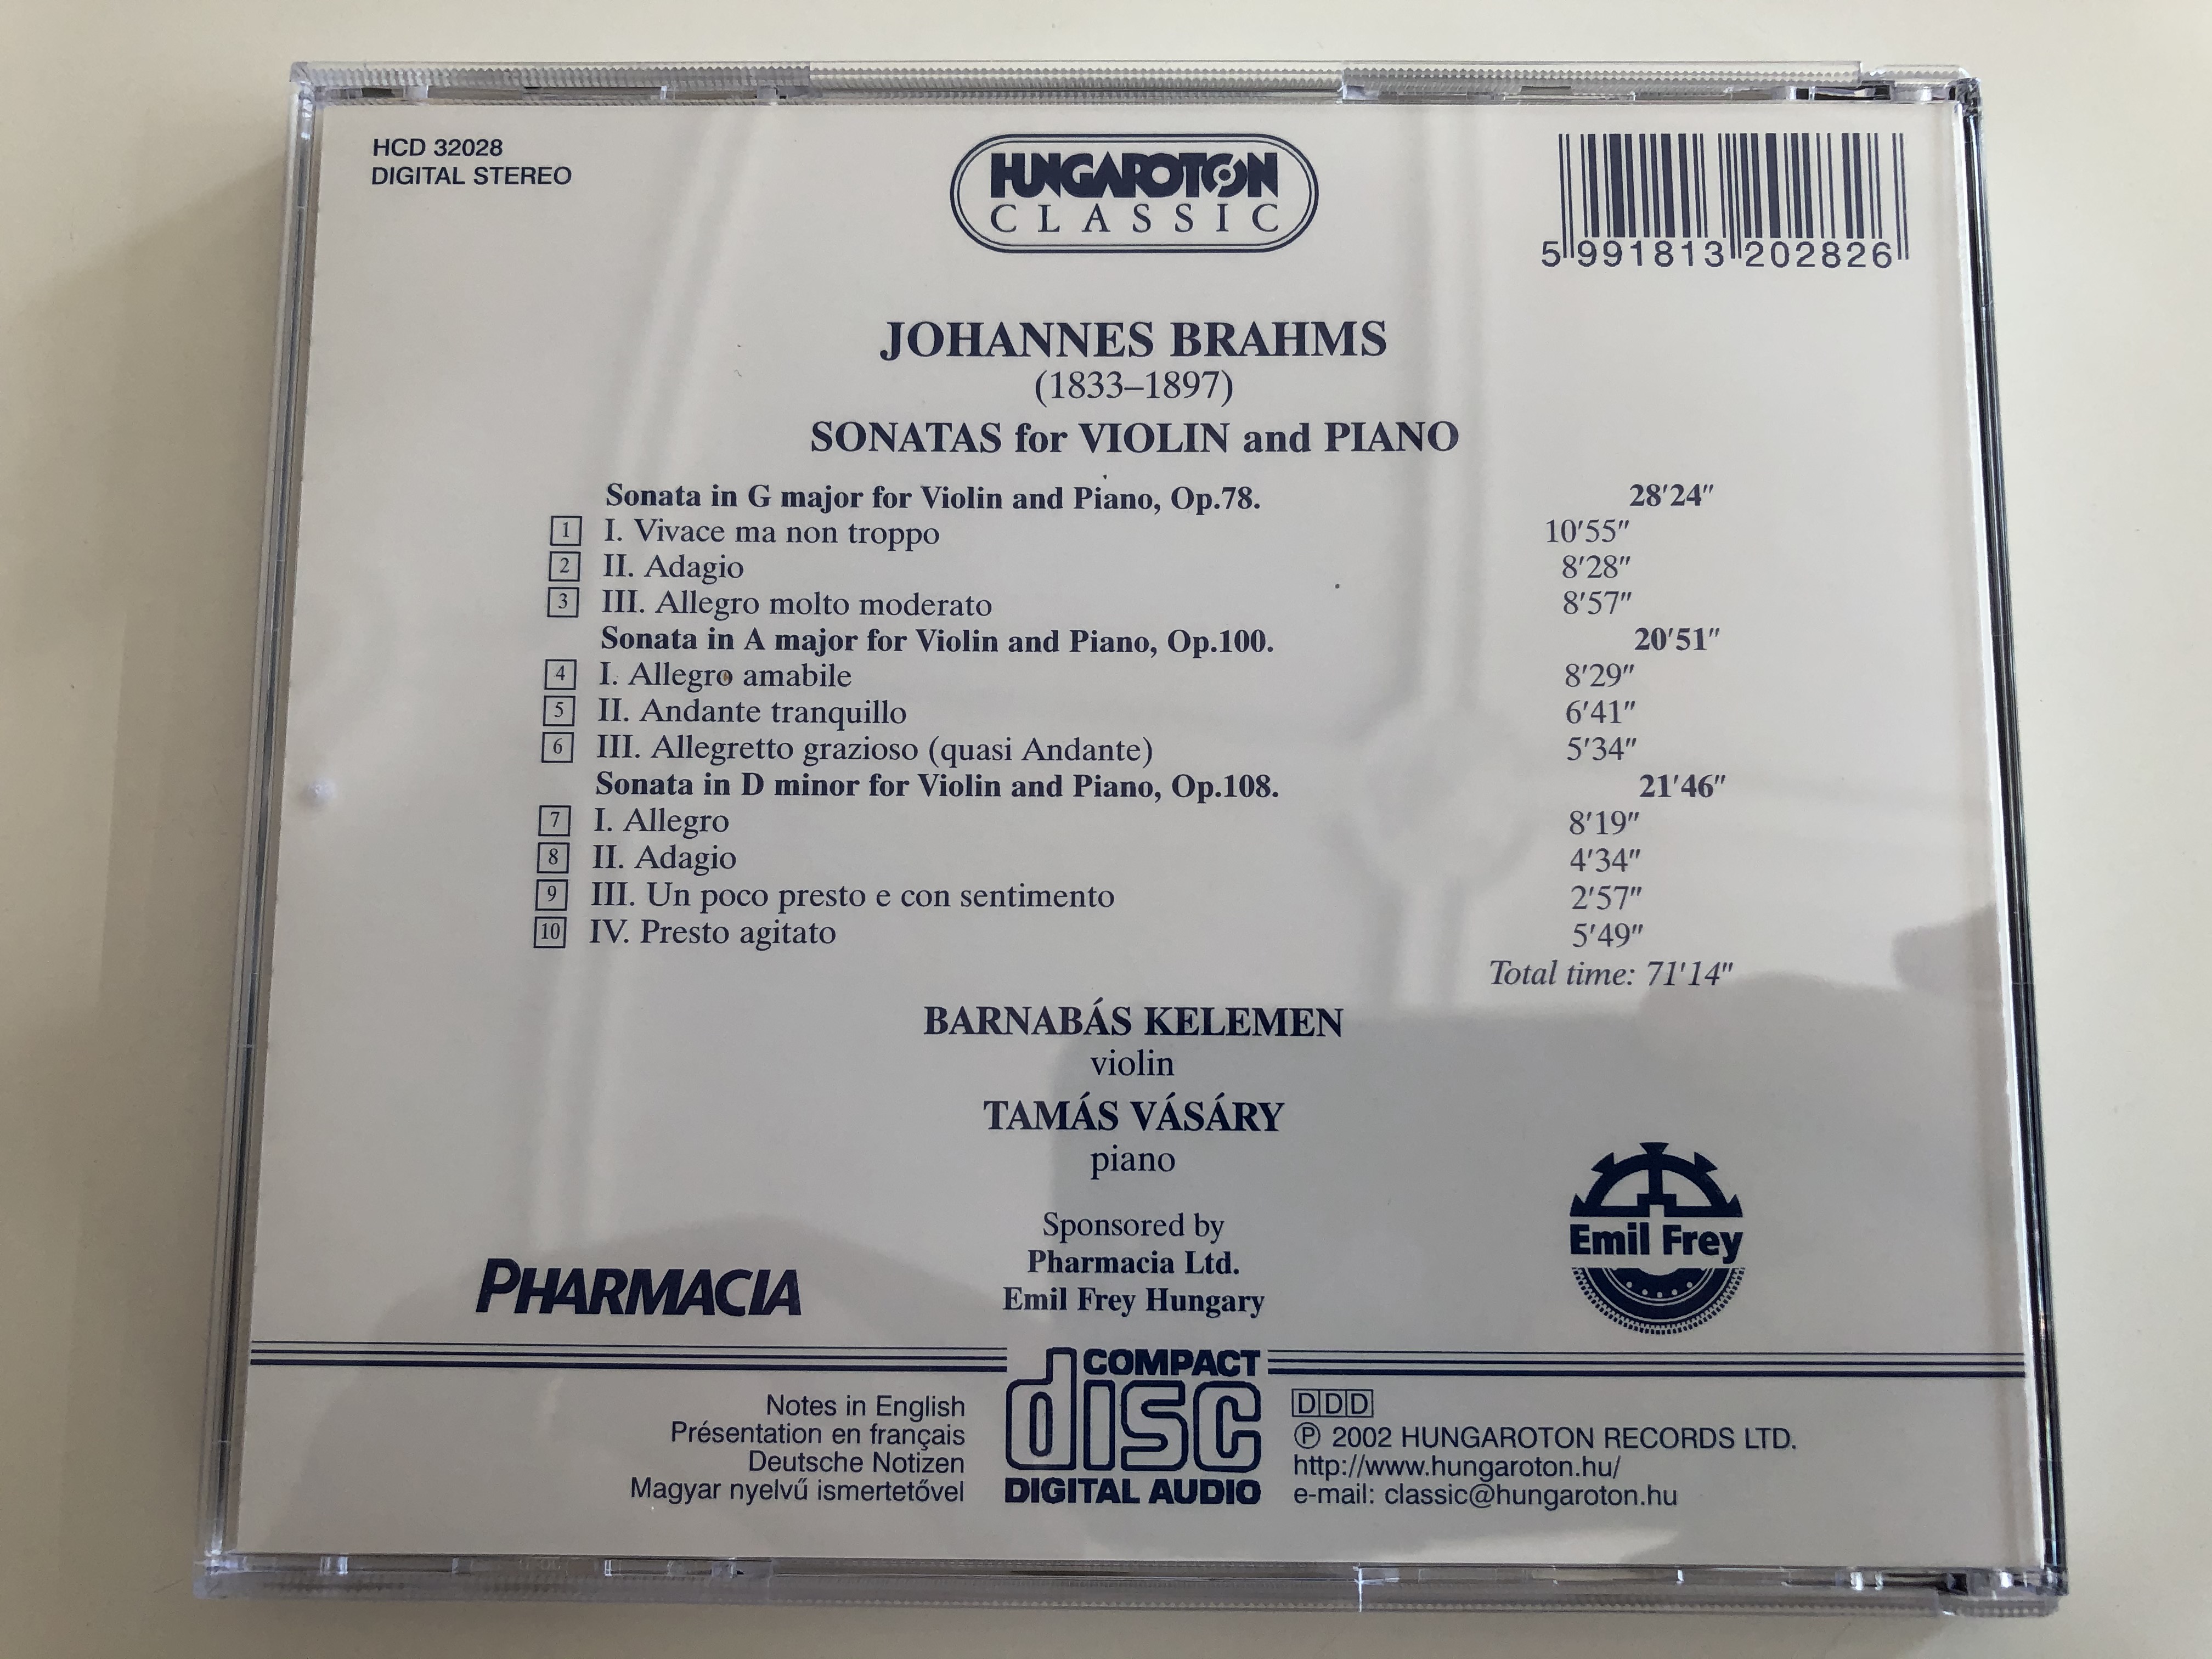 johannes-brahms-sonatas-for-violin-and-piano-g-major-op.78-a-major-op.100-d-minor-op.108-barnabas-kelemen-tamas-vasary-hungaroton-classic-audio-cd-2002-stereo-hcd-32028-7-.jpg